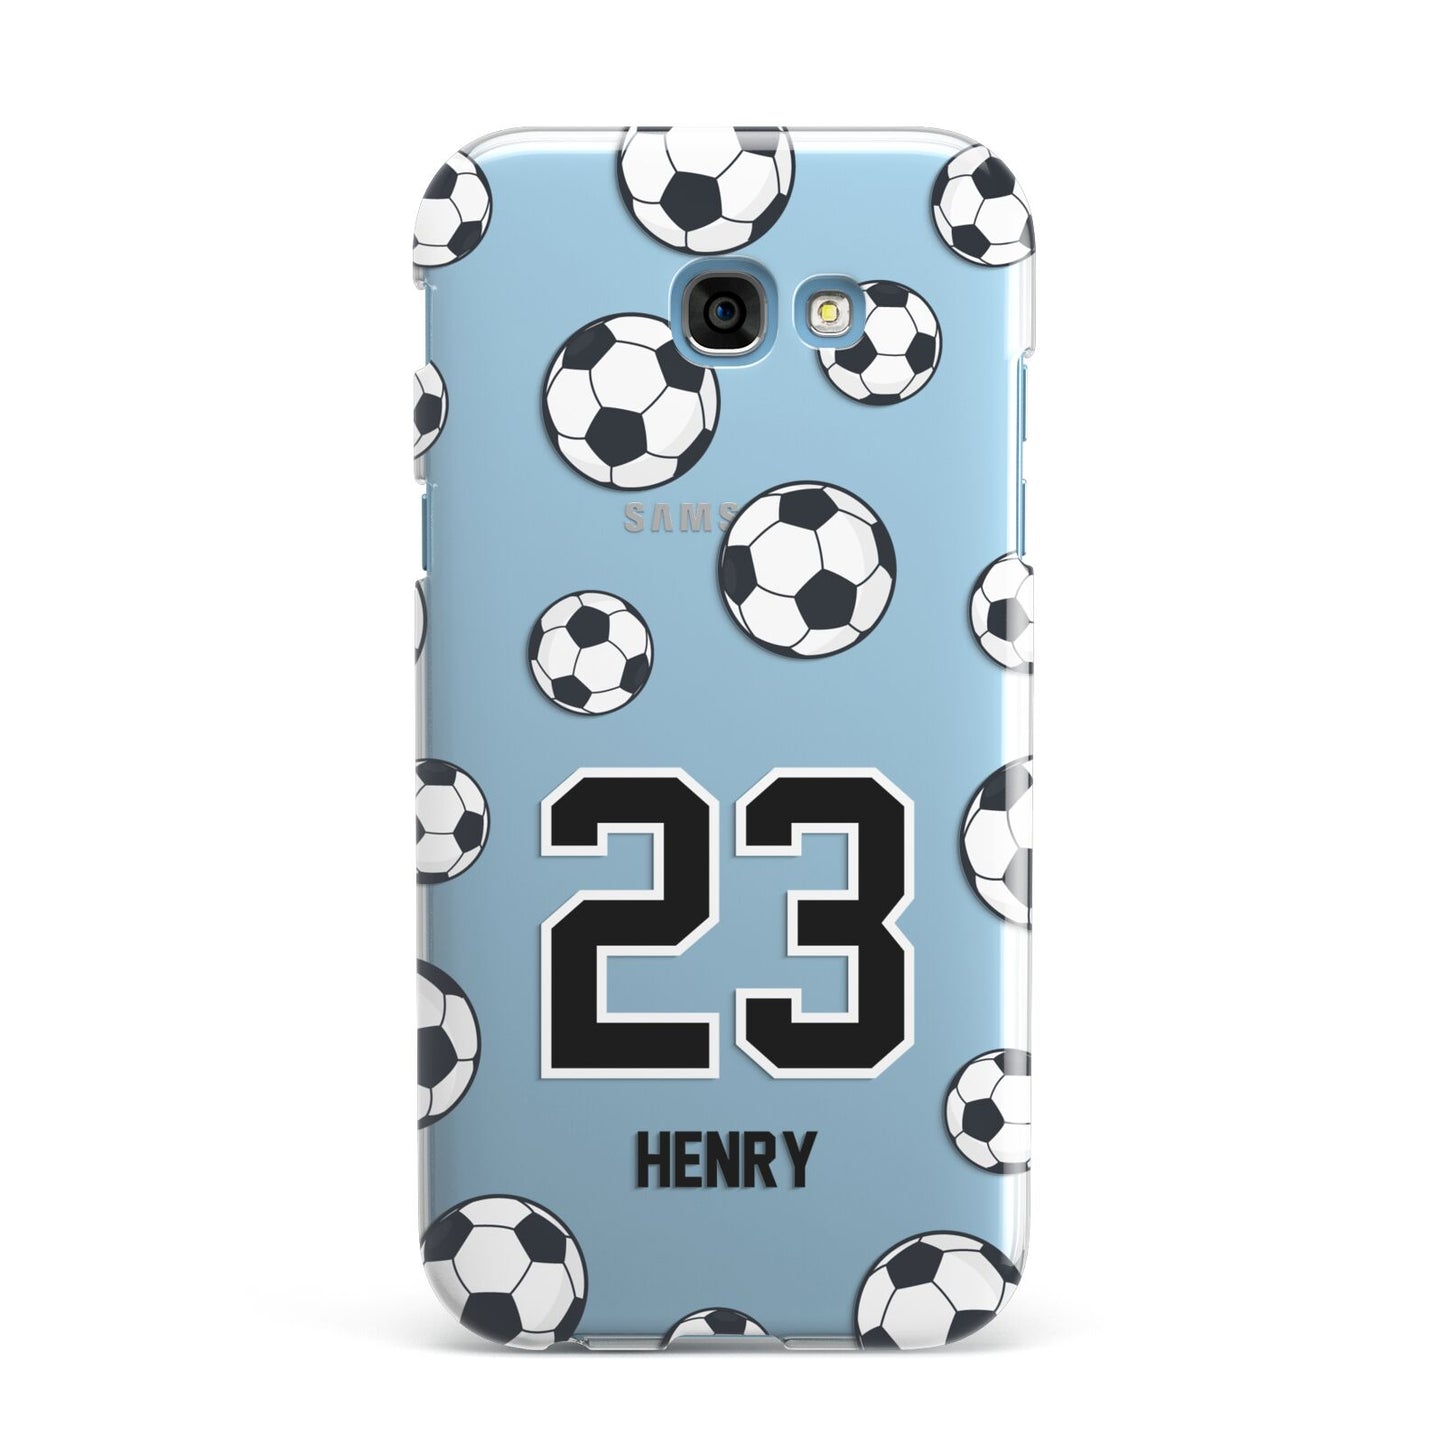 Personalised Football Samsung Galaxy A7 2017 Case